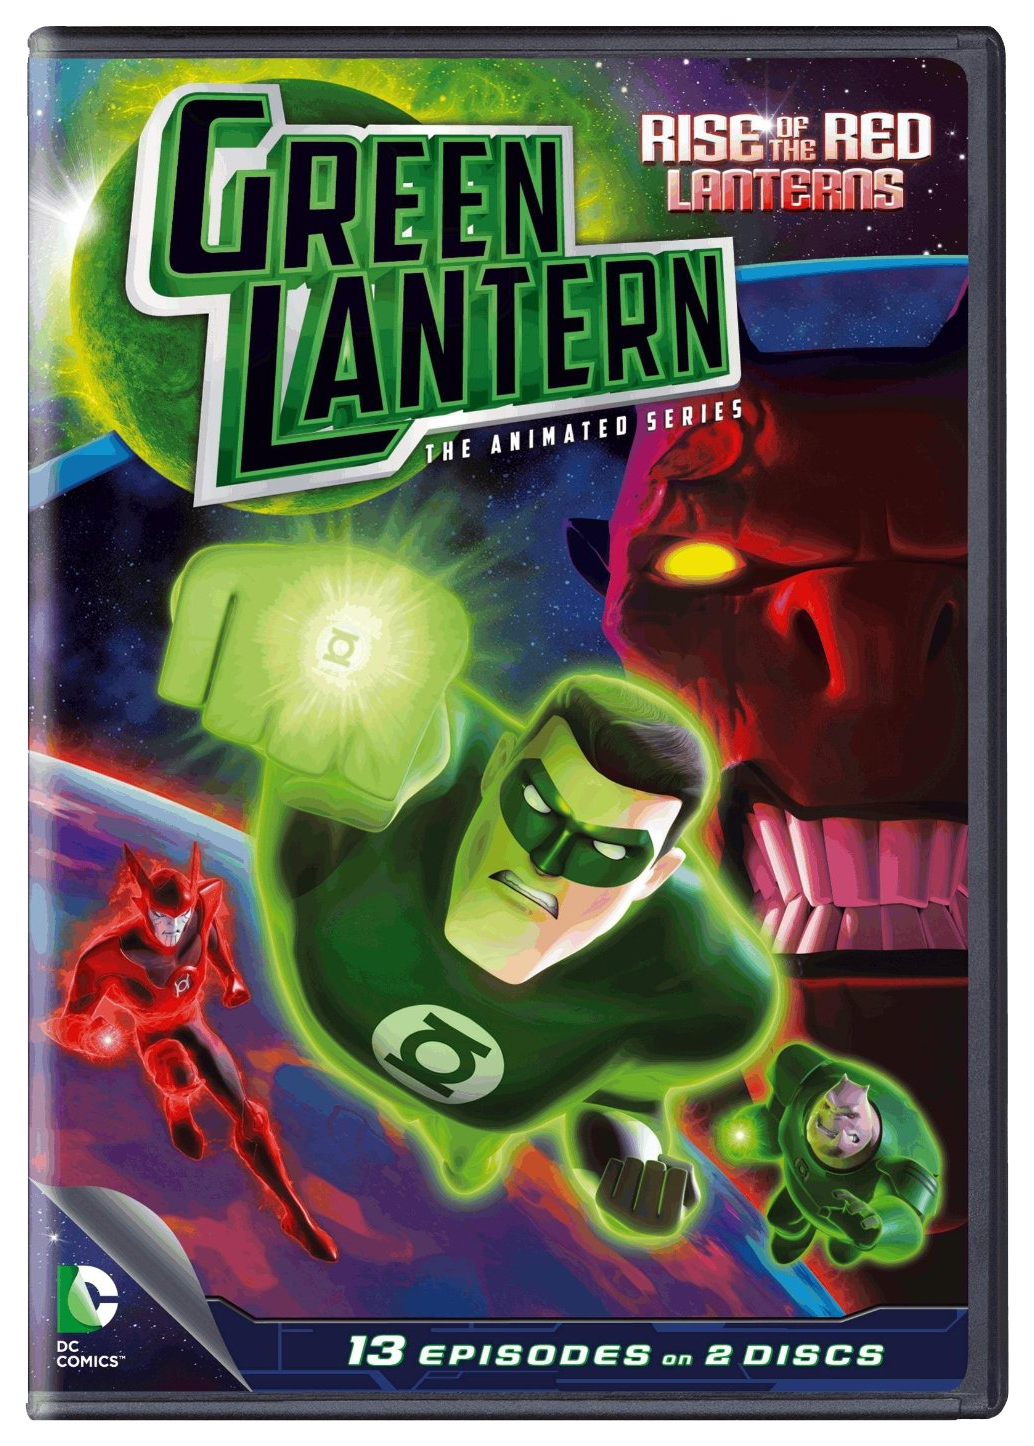 Green Lantern' DVD Will Arrive in August